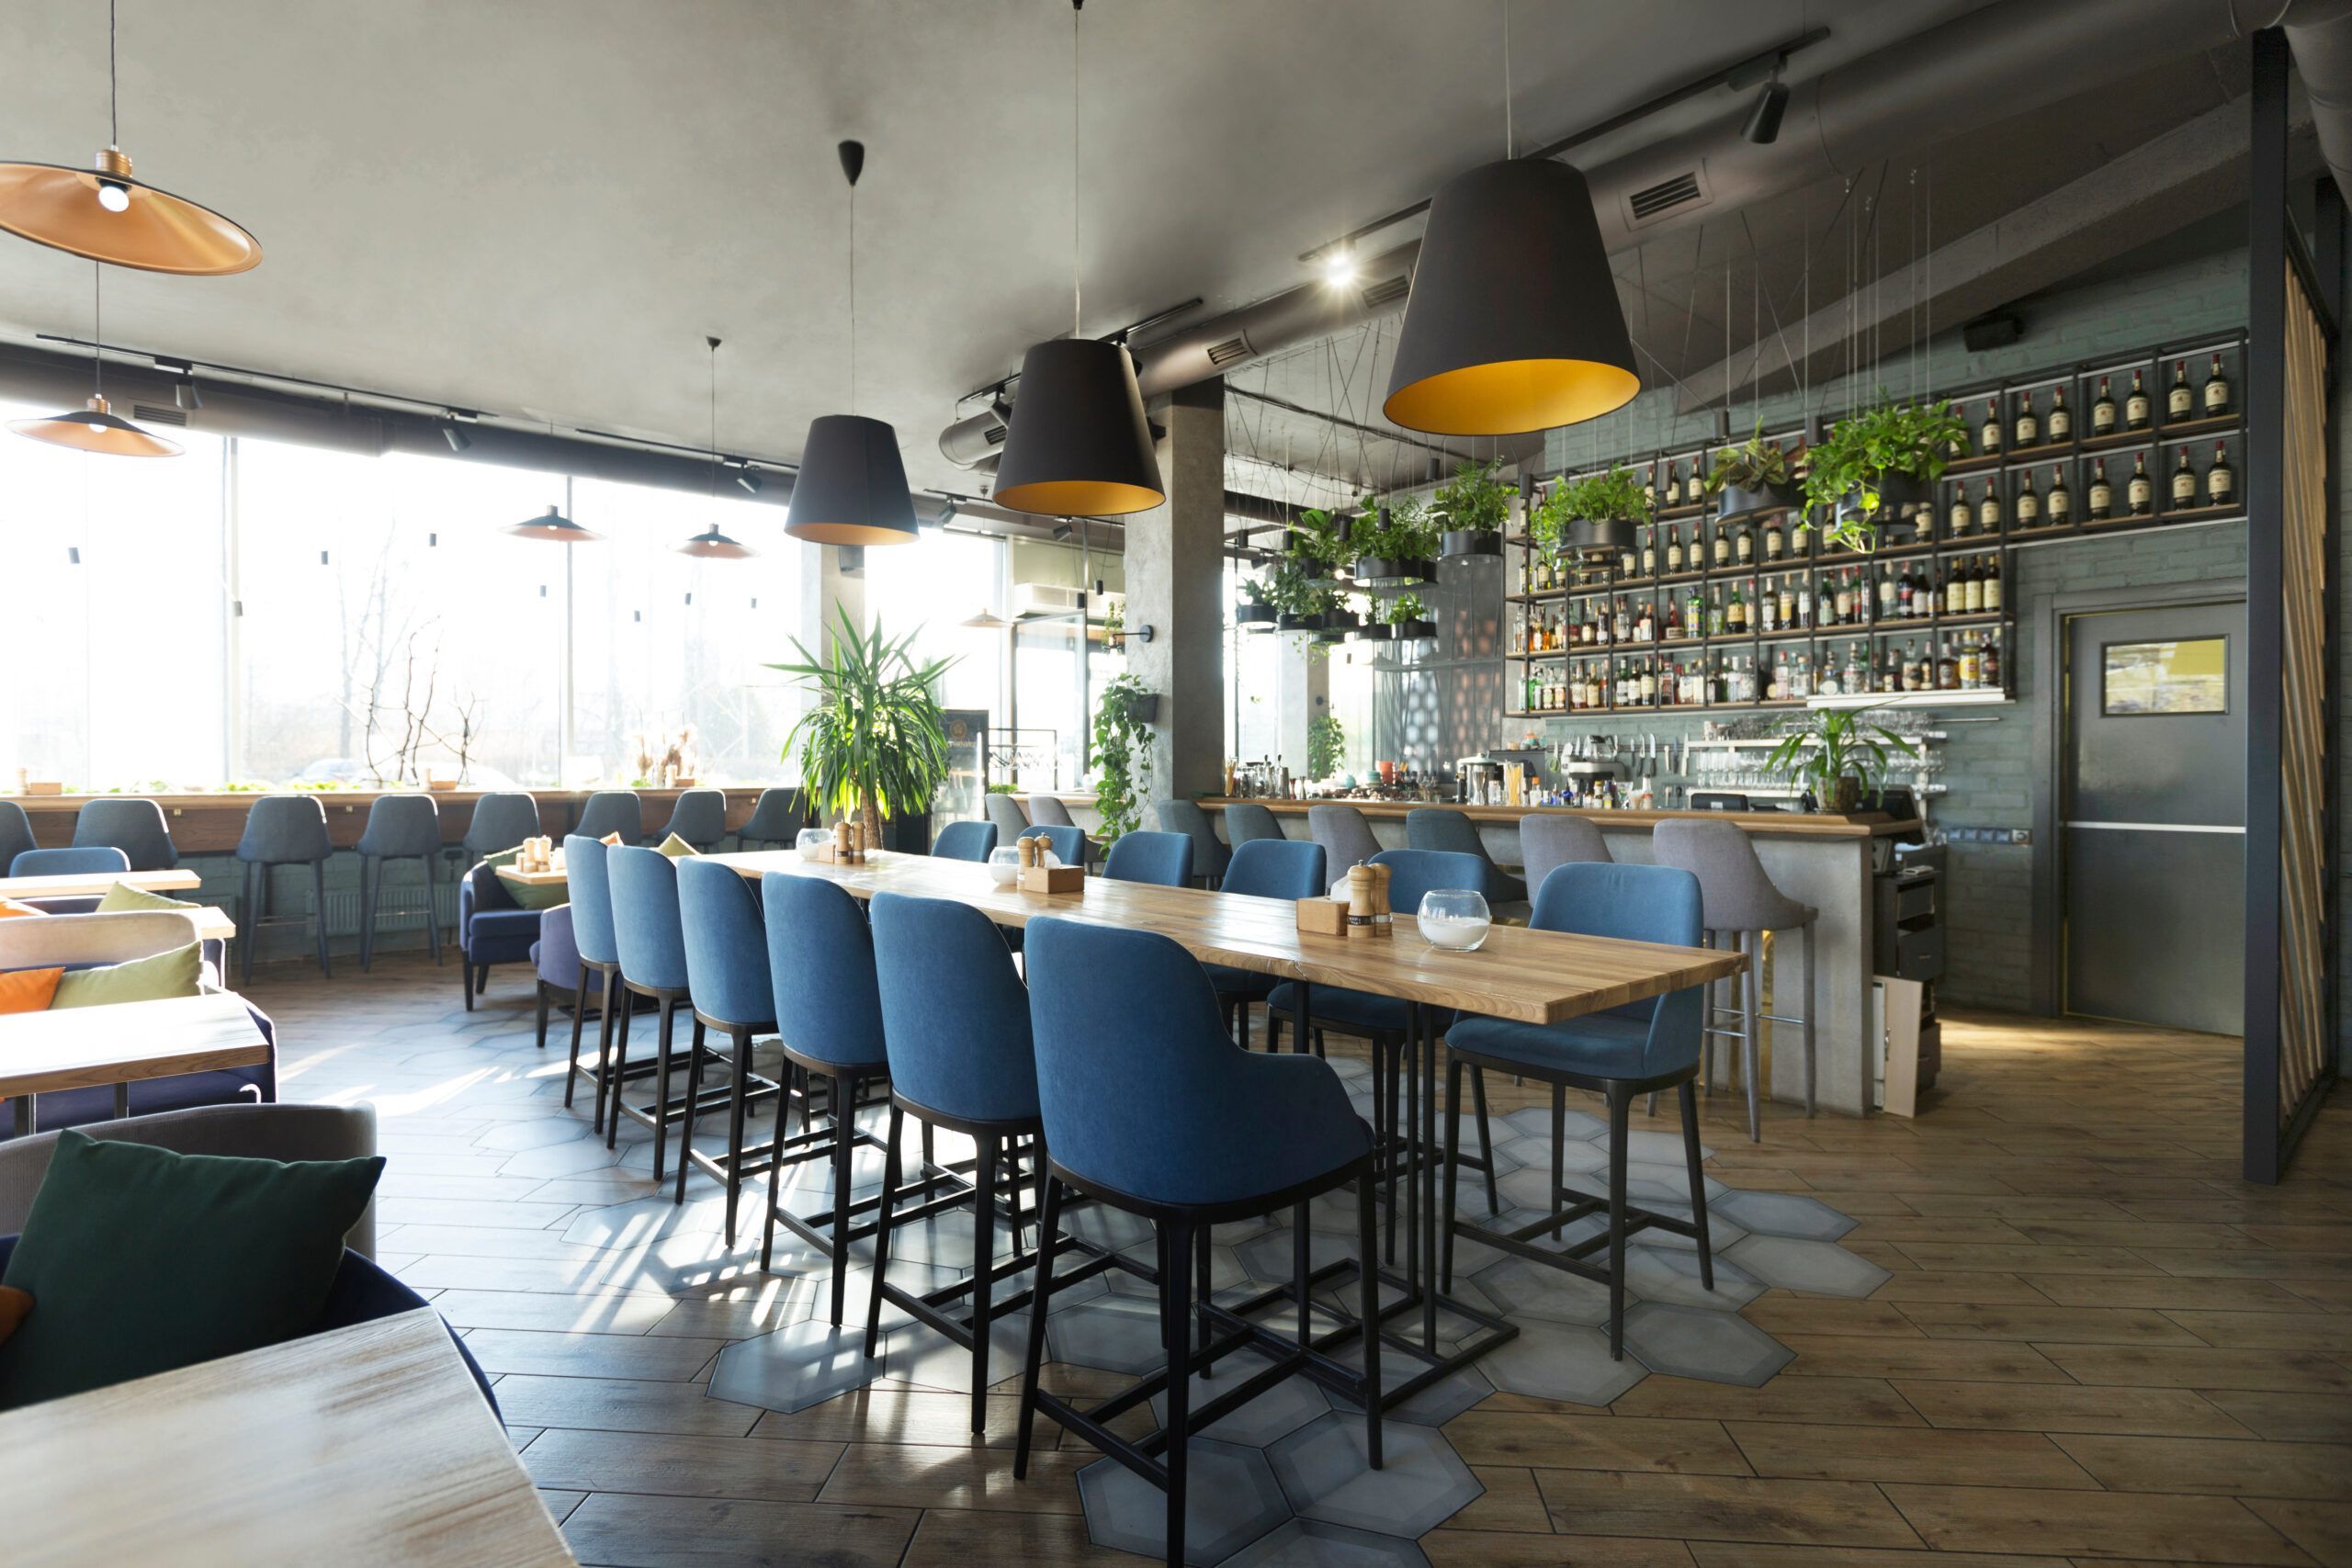 Best Restaurant Projects of 2019 - Interior Design